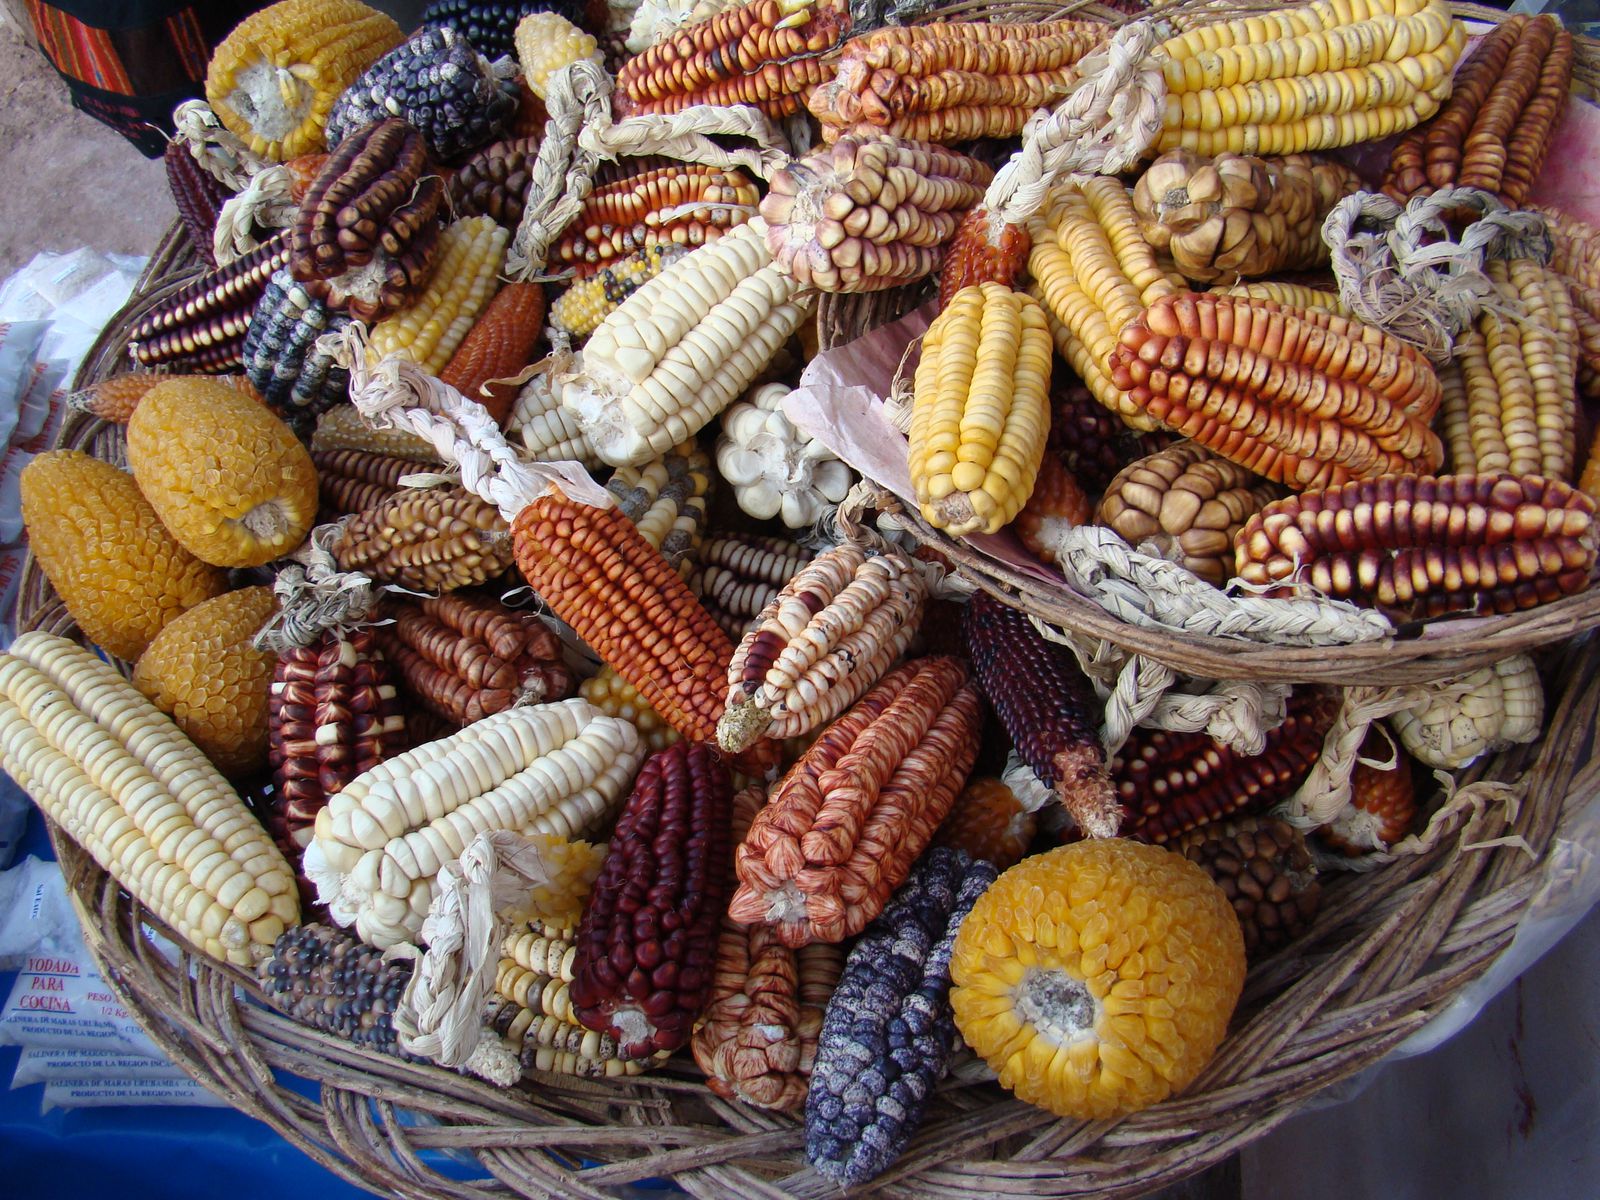 Types of Corn